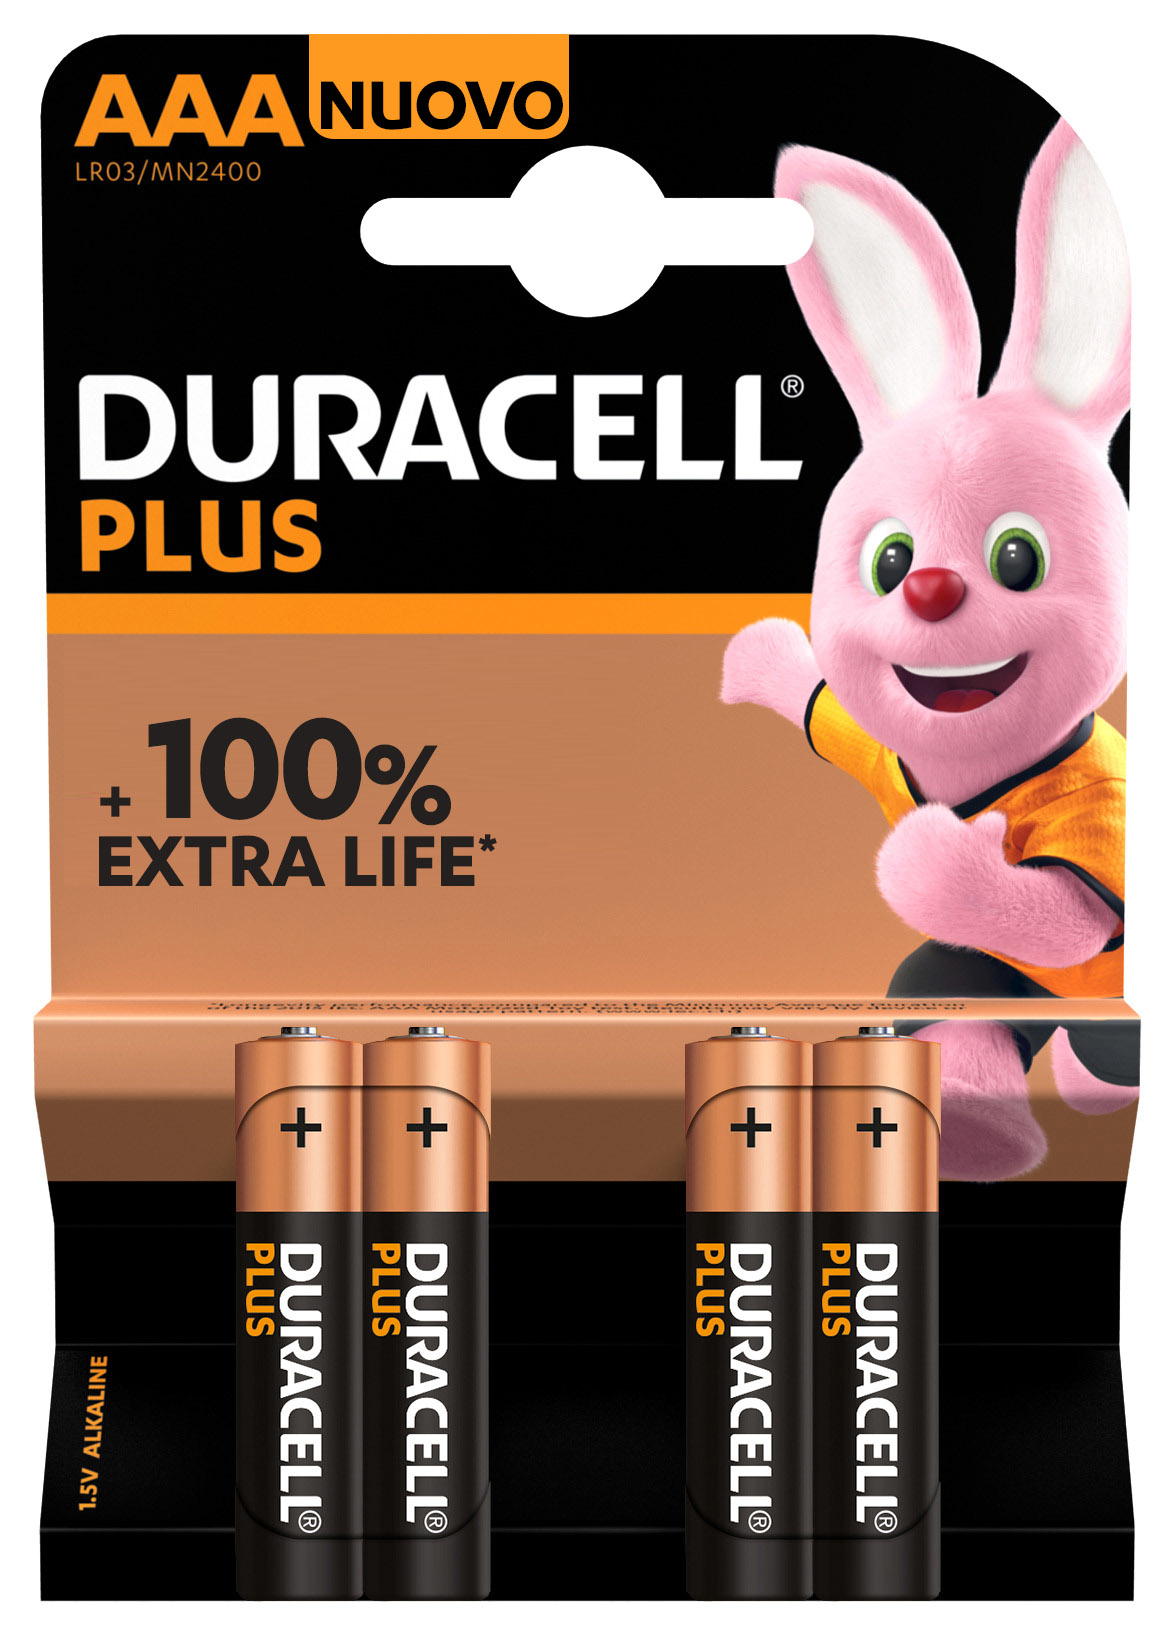 Duracell Plus AAA